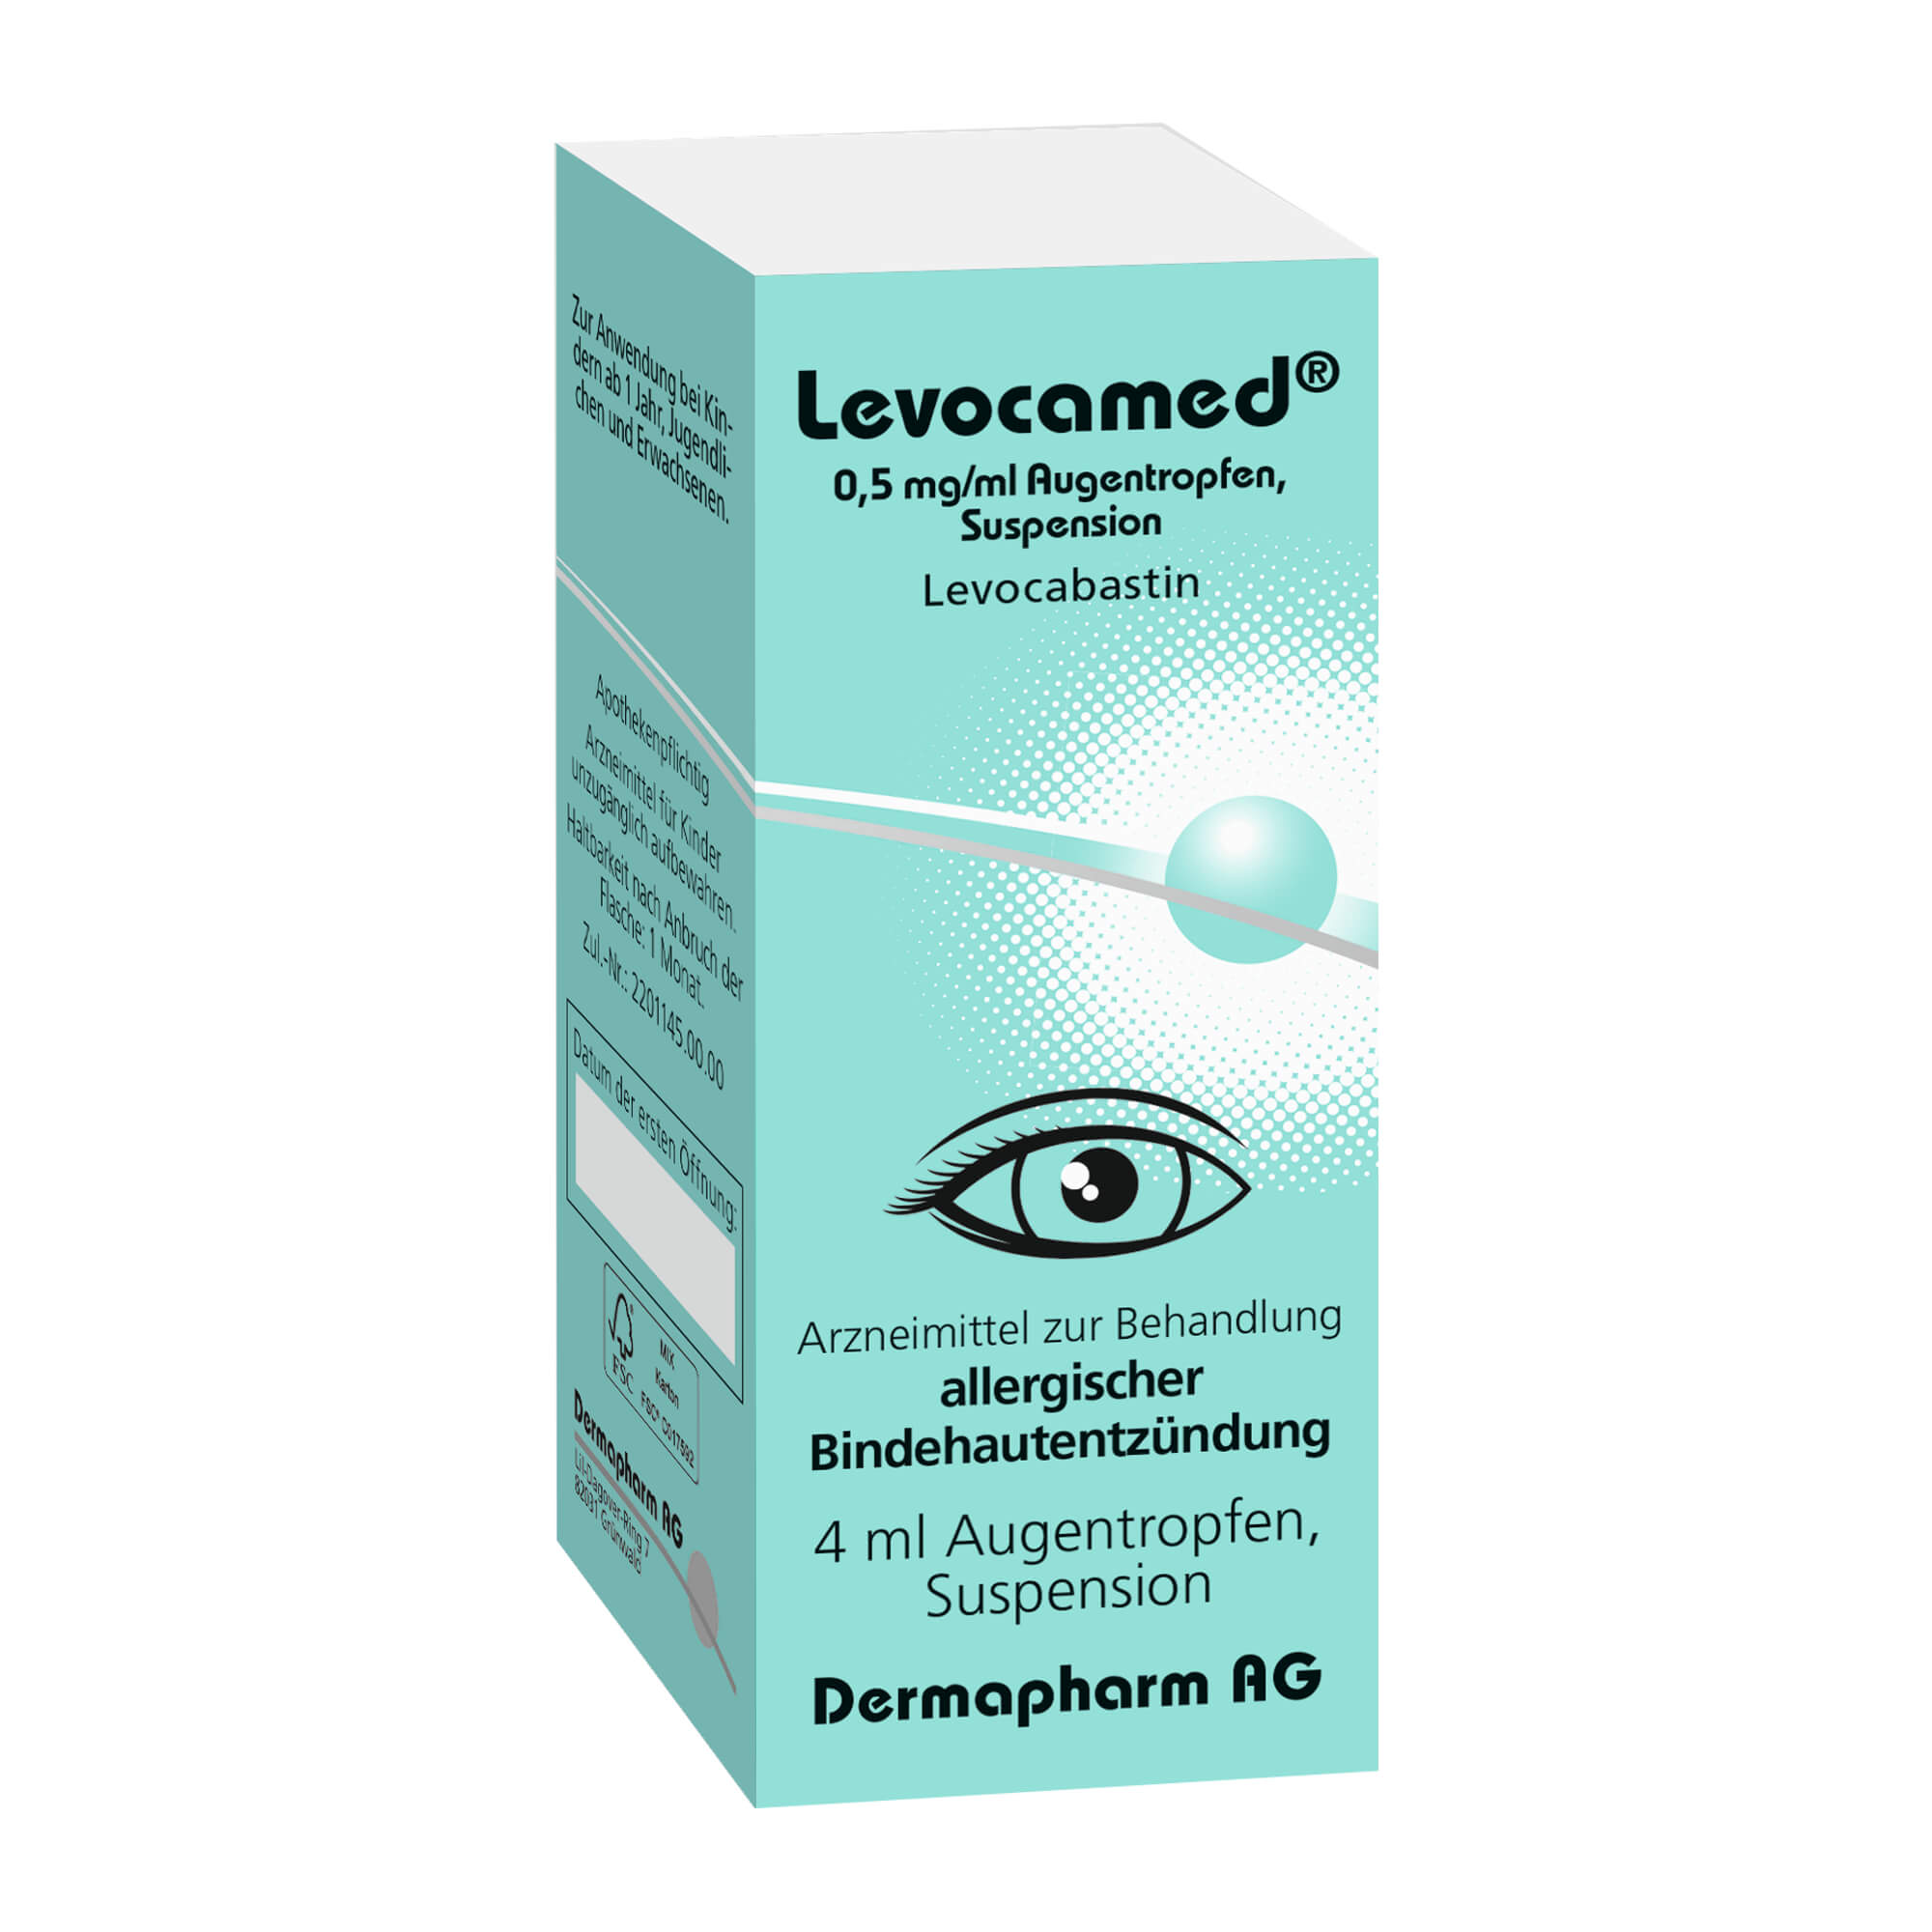 Levocamed 0,5 mg/ml Augentropfen